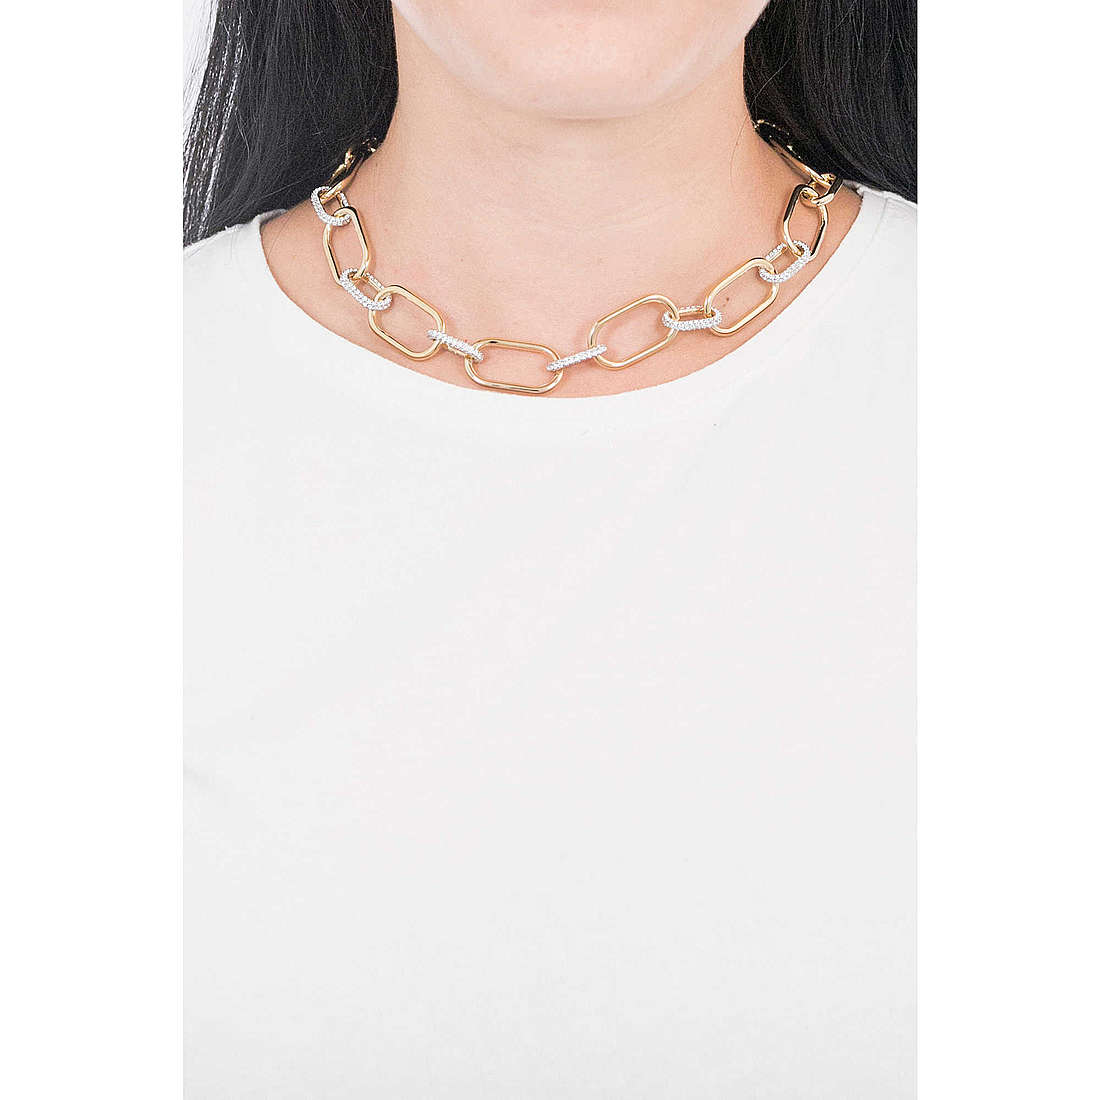 Swarovski necklaces Time woman 5558521 wearing